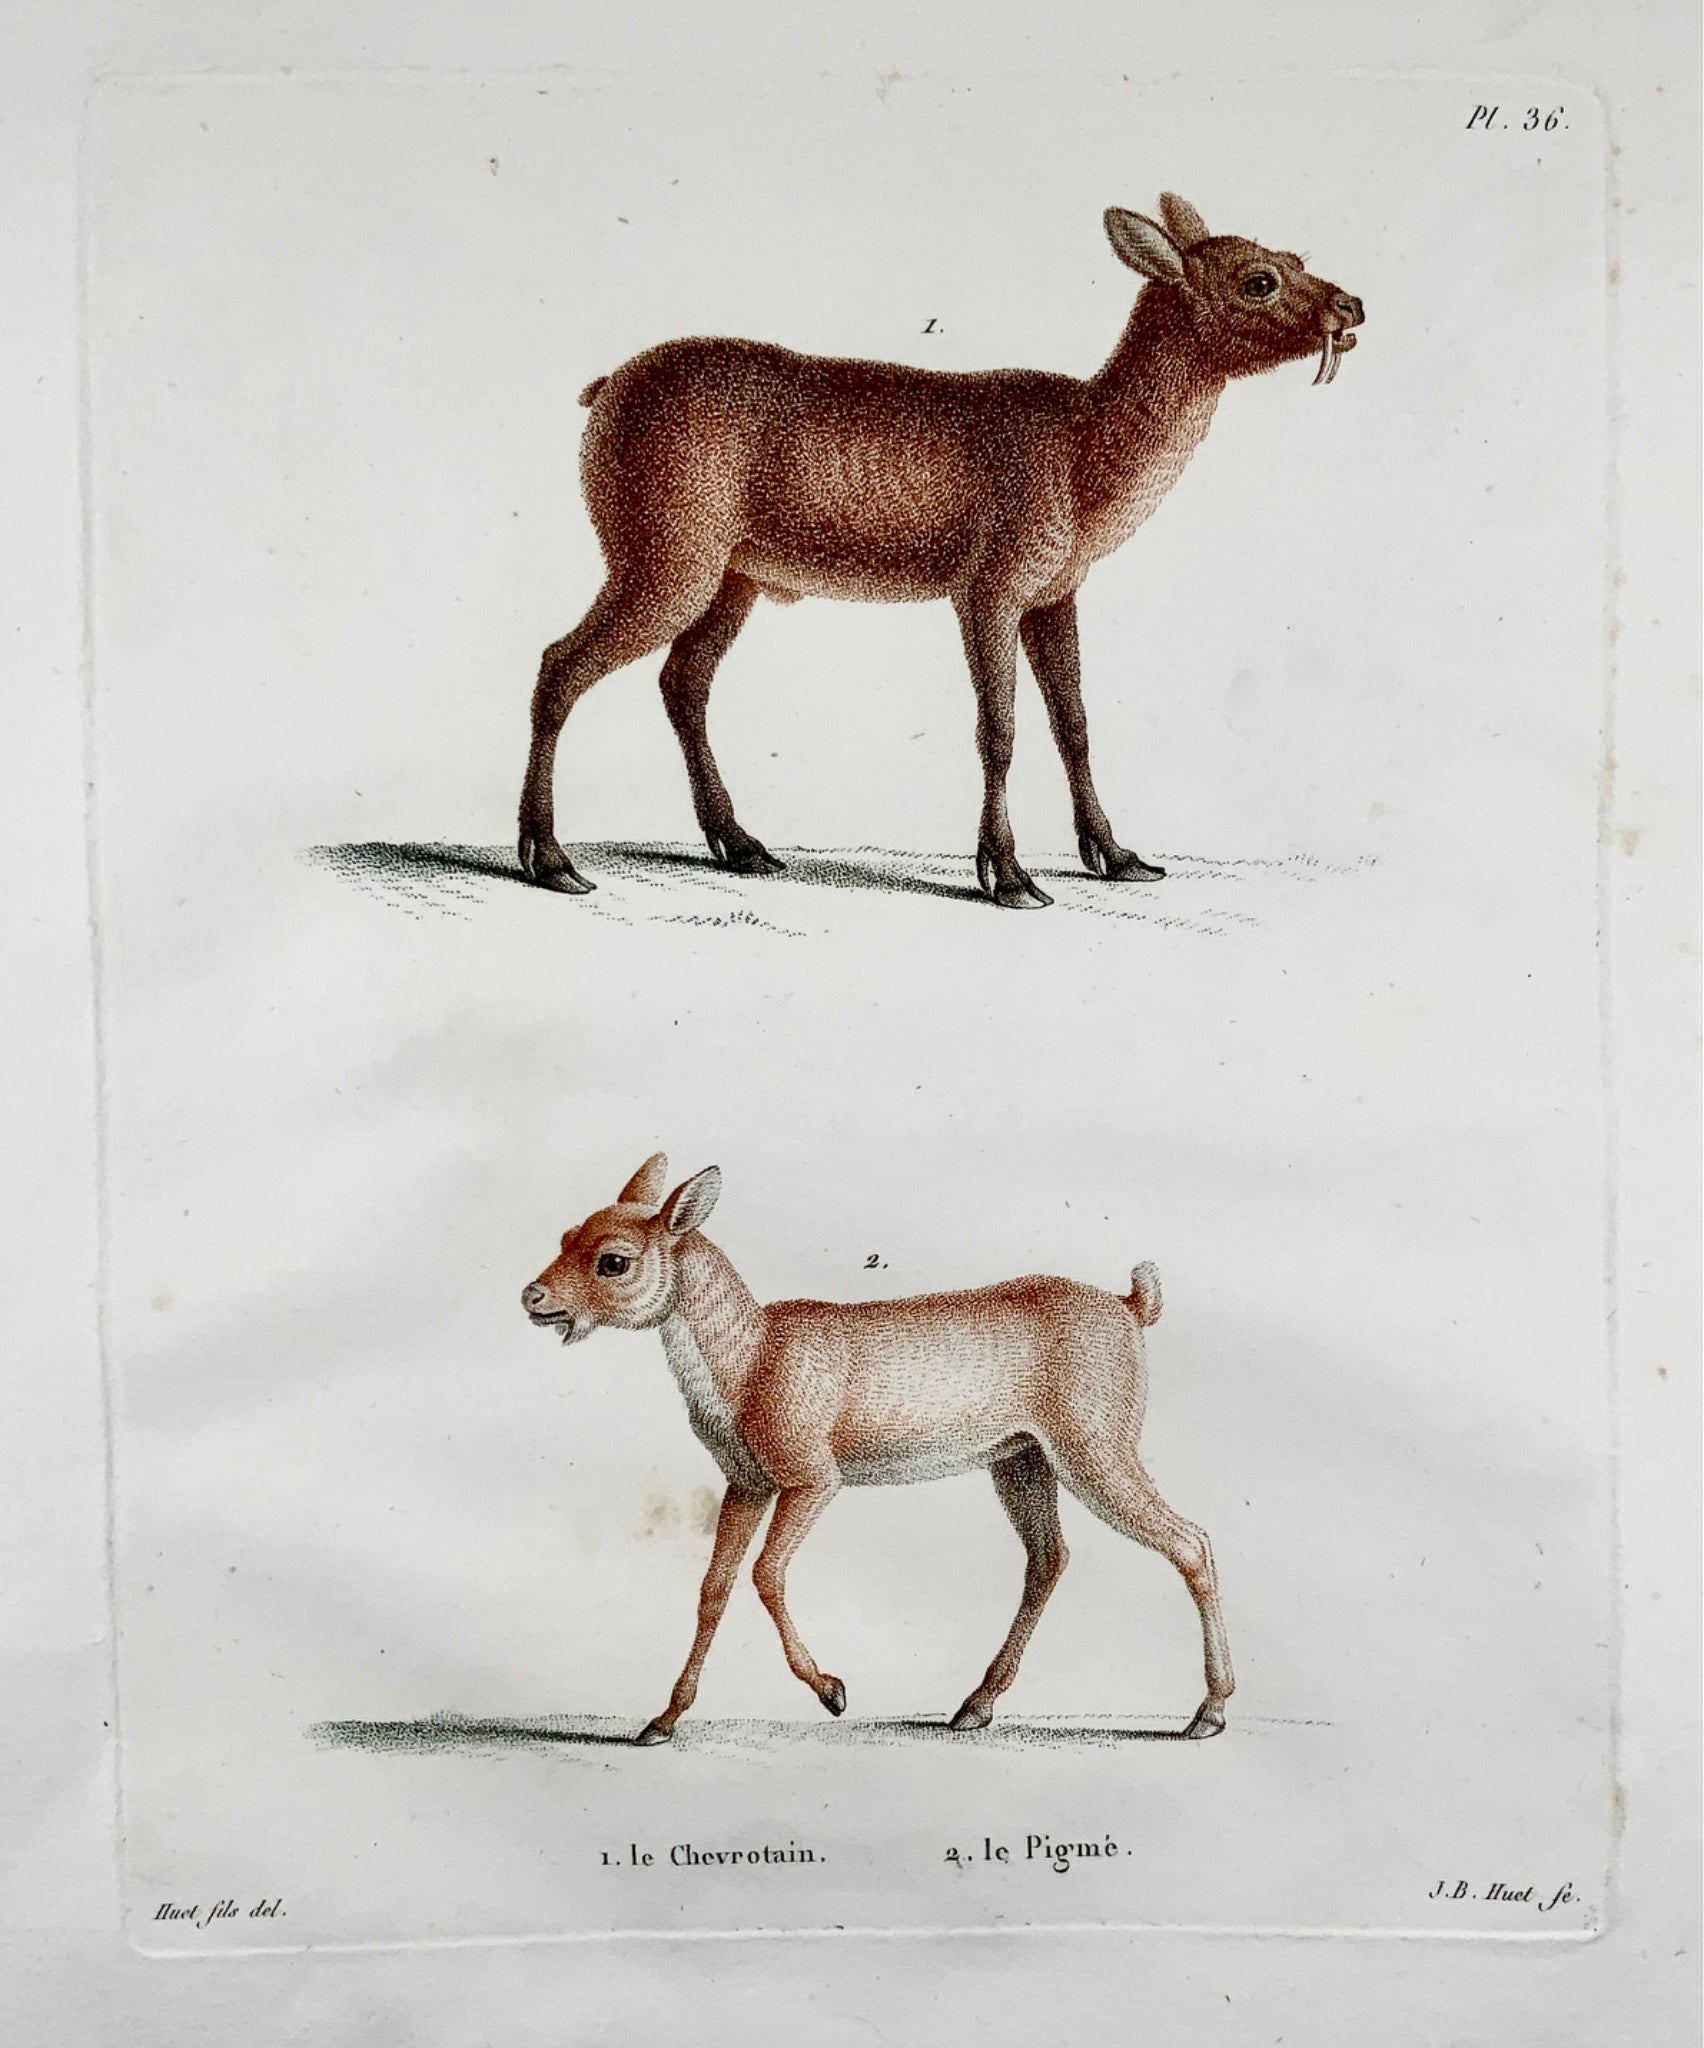 1808 Jean Bapt. Huet [1745-1811] MOUSE DEER Muntjac - coloured stipple engraving - Mammals